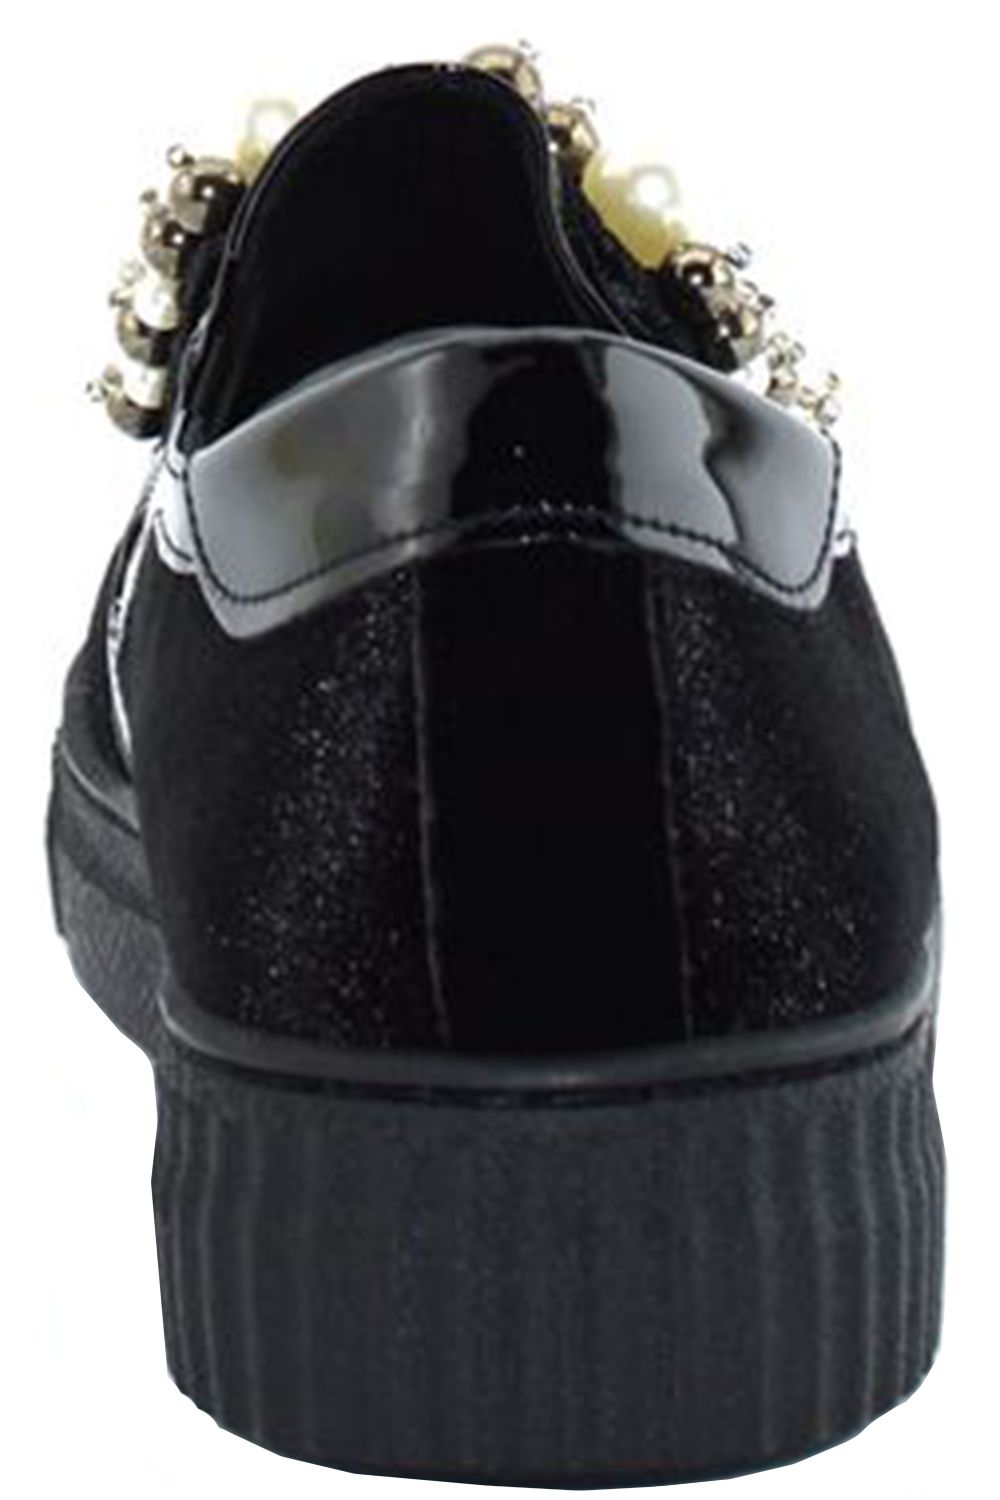 Ботинки Holala, размер 29, цвет черный HS0020T - фото 7